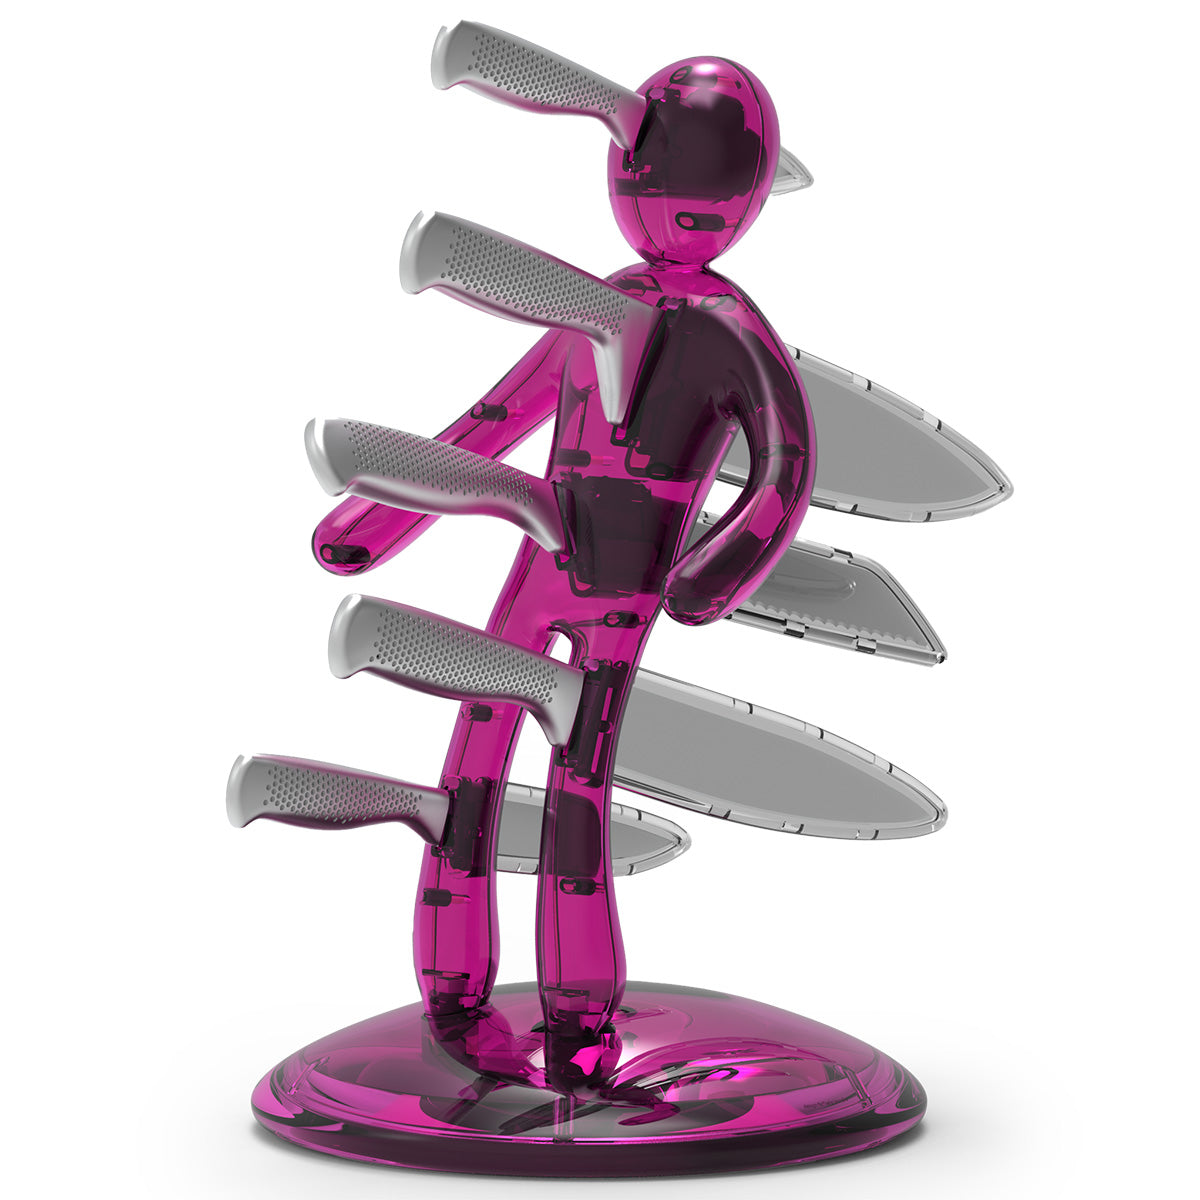 Voodoo/TheEx "Classic Edition" Knife Set - Pink Translucent Plastic Holder